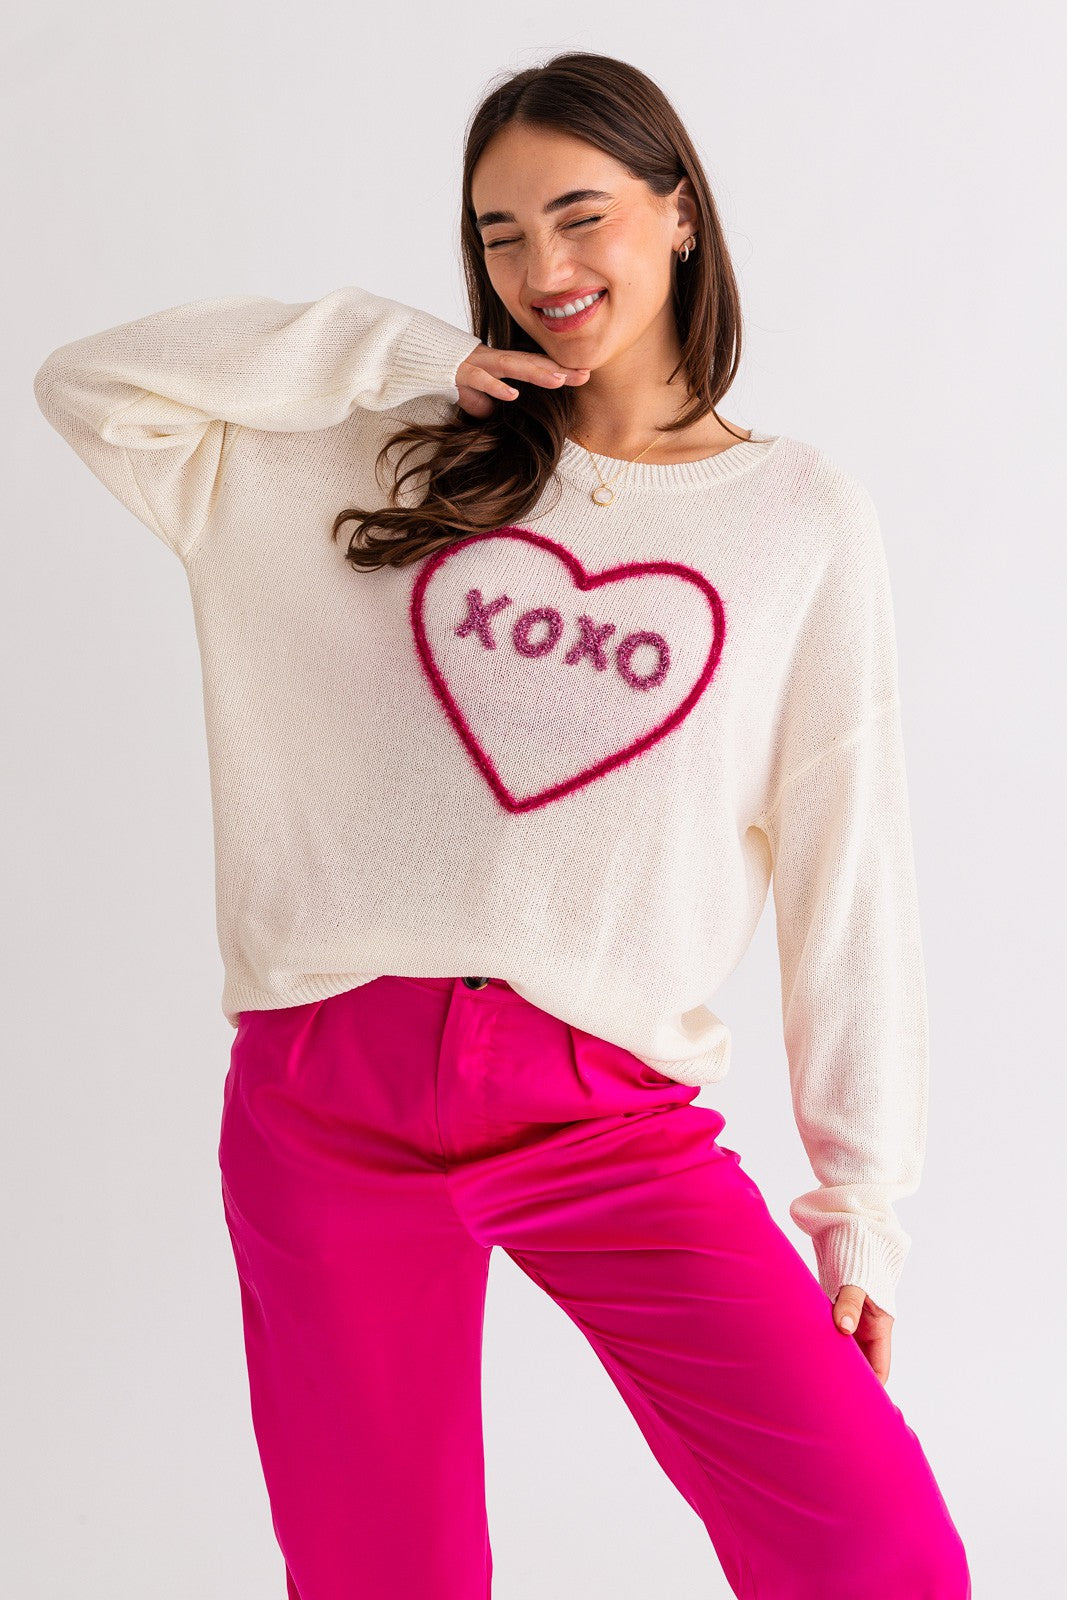 XOXO Pullover Lightweight Sweater